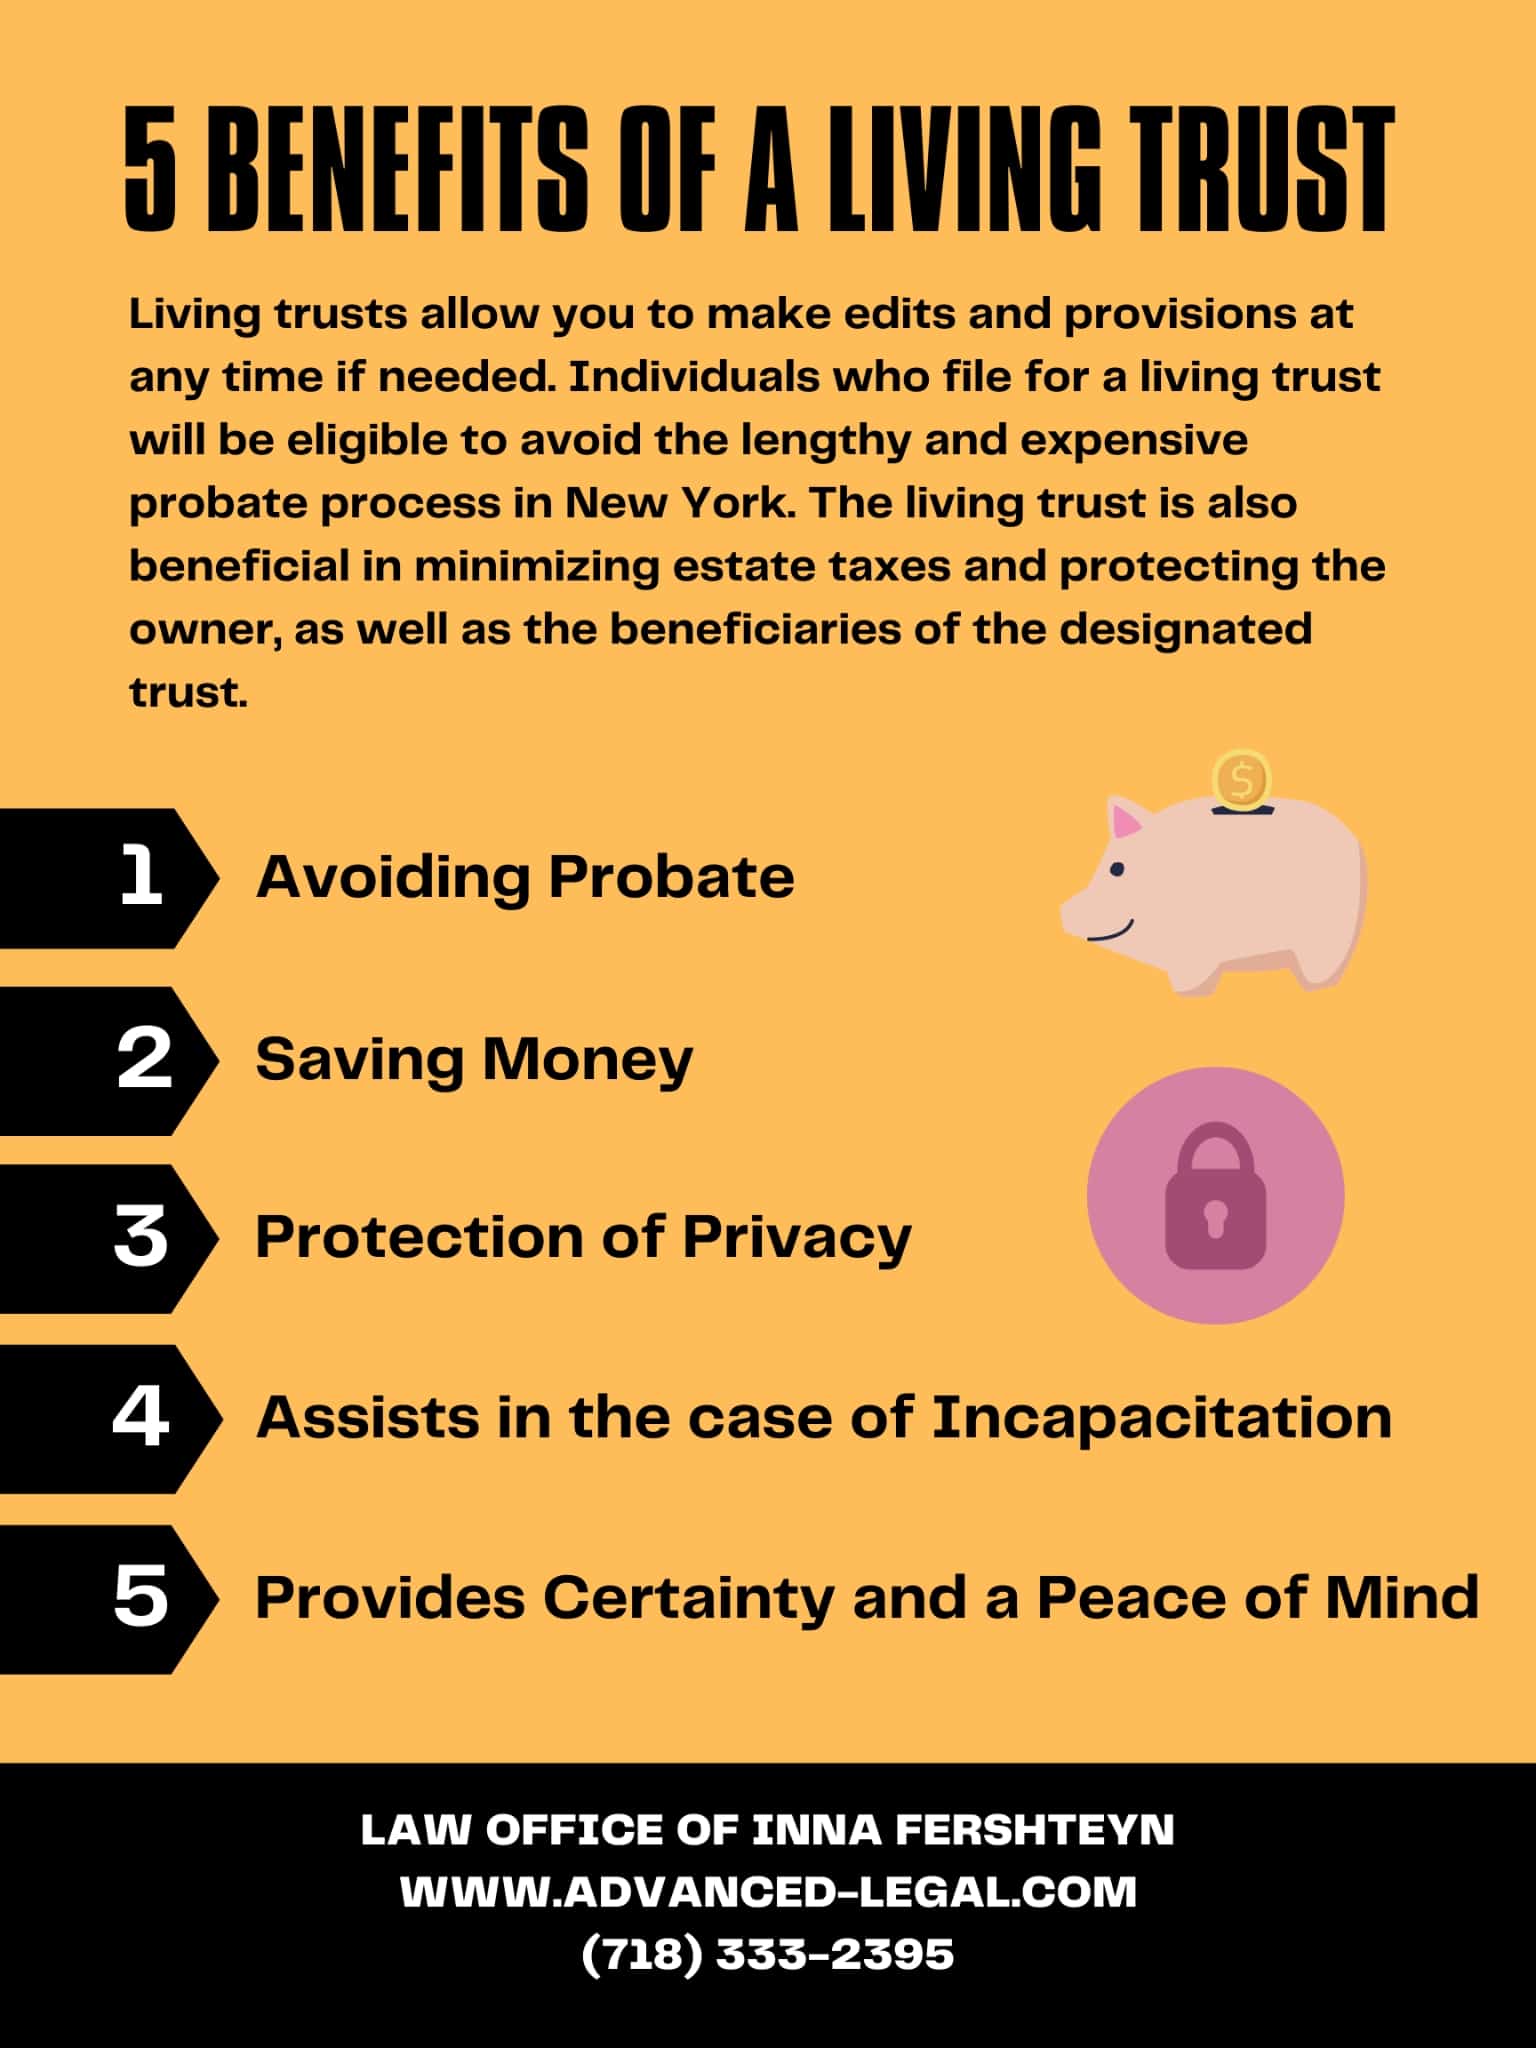 5 Benefits of a Living Trust